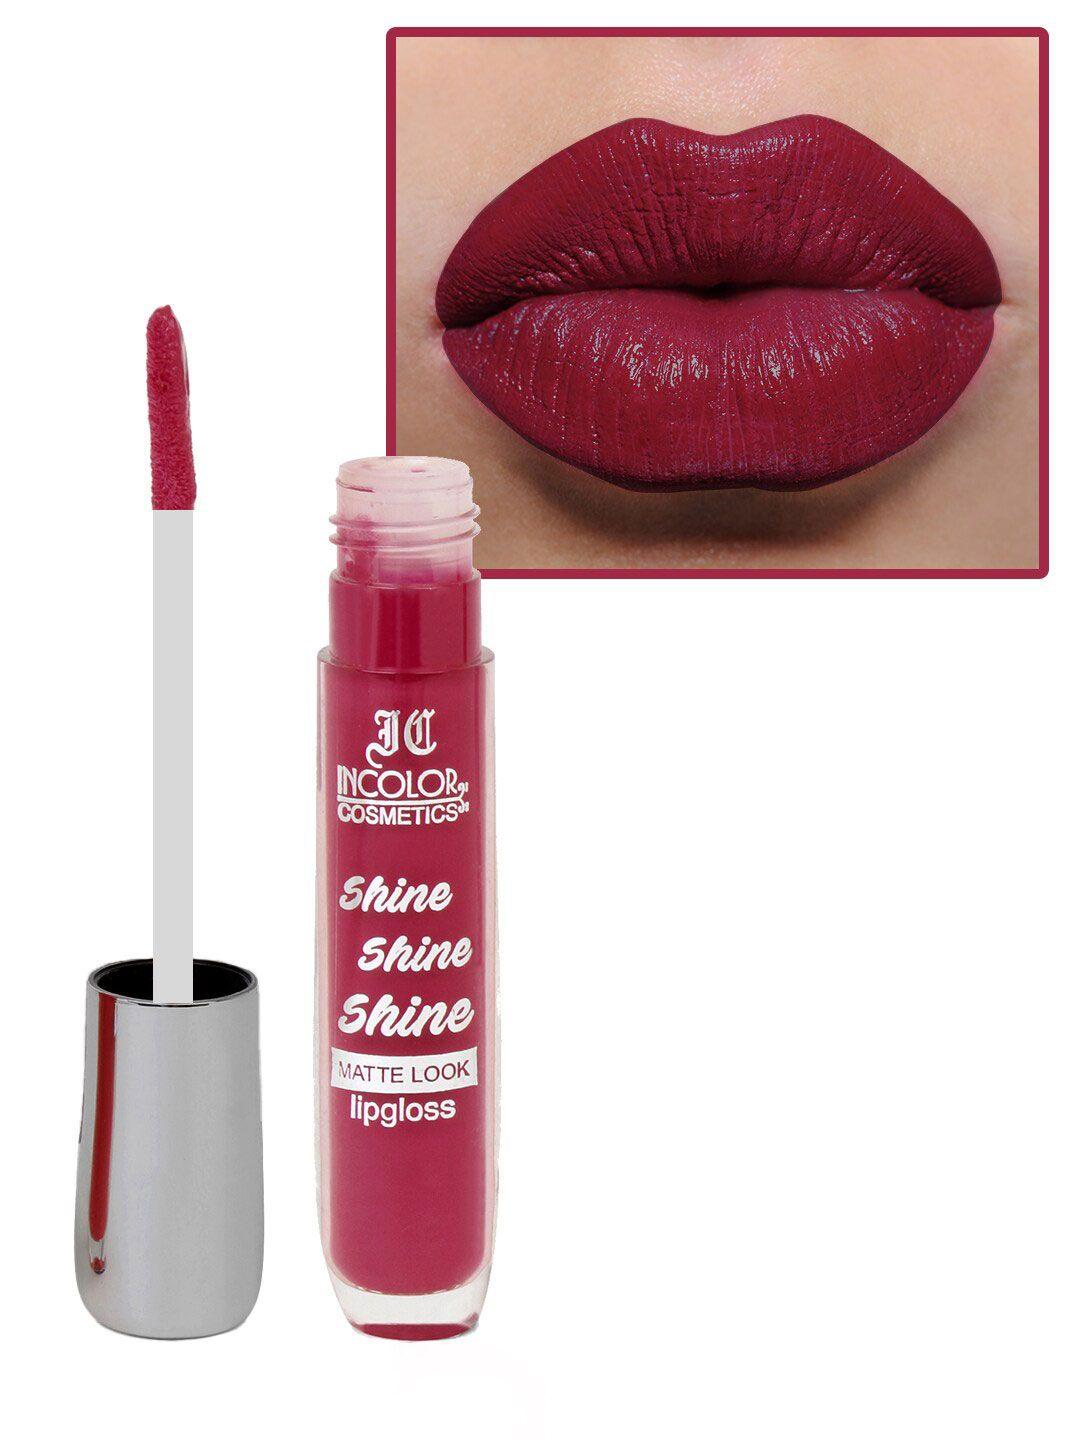 incolor shine shine shine long-wearing lightweight matte look lip gloss 8ml - shade 12